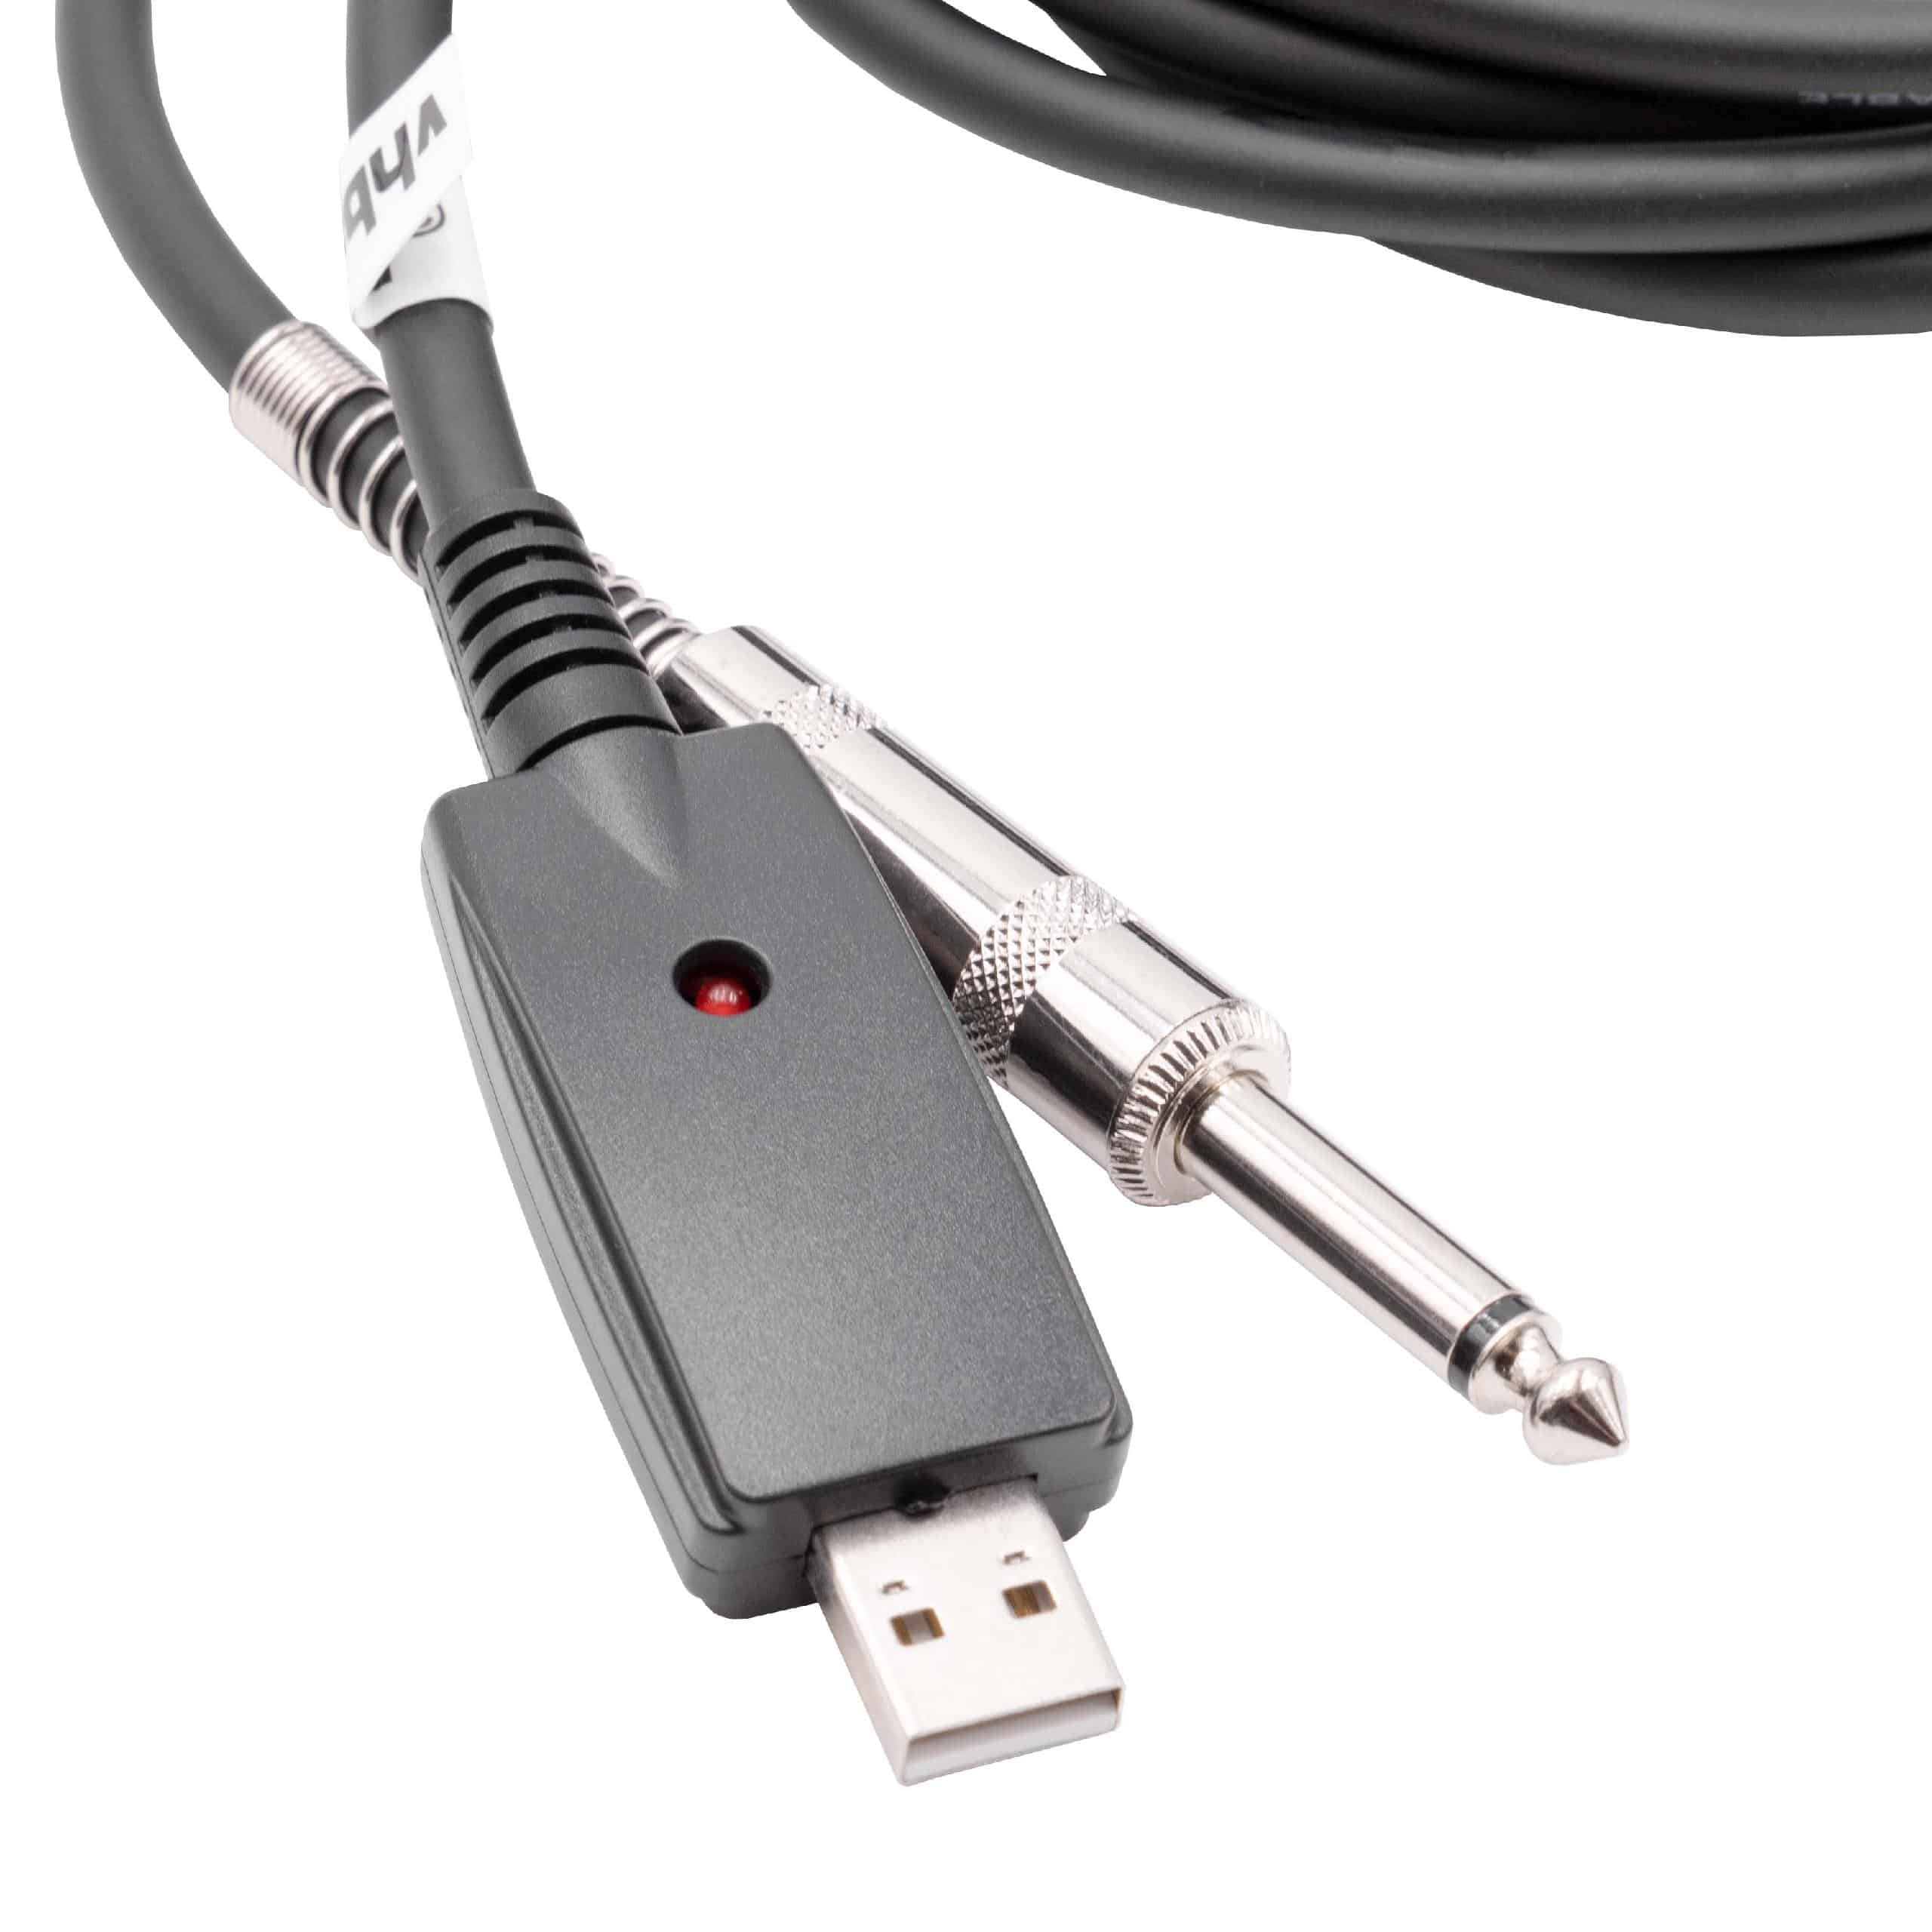 vhbw câble adaptateur USB 2.0 vers 6,35mm jack - 2,8m câble audio, câble microphone, câble USB